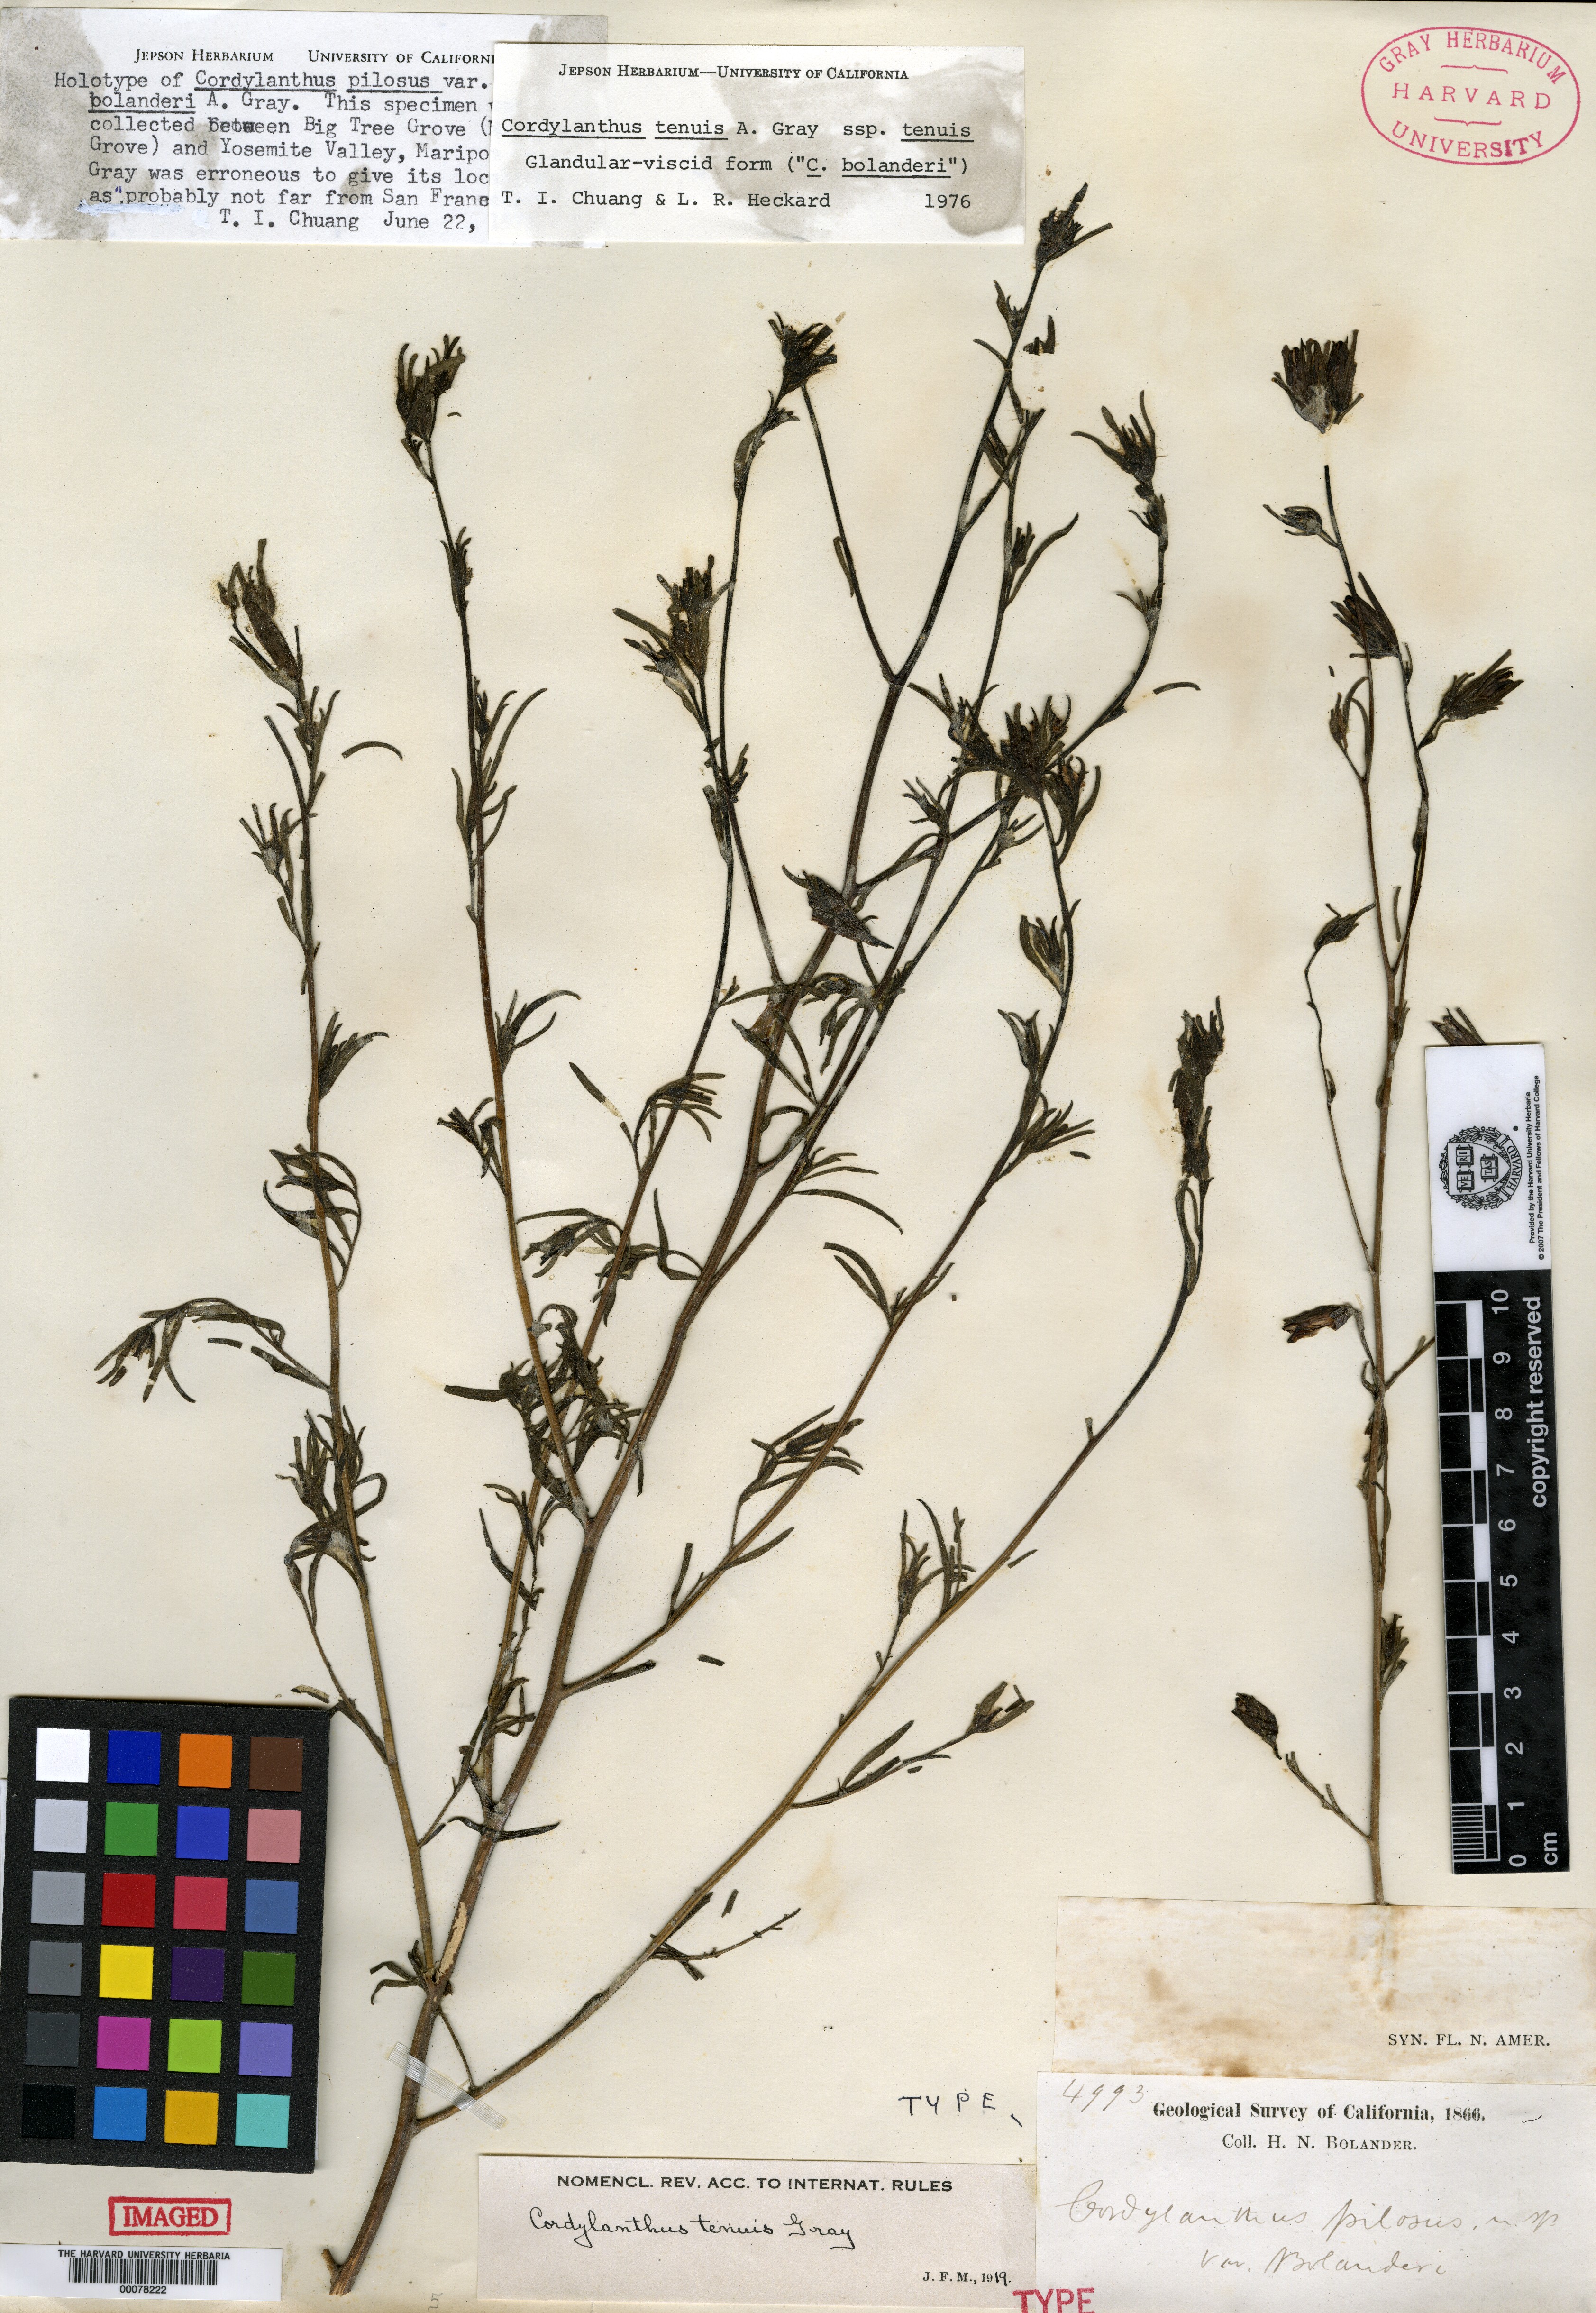 Cordylanthus pilosus var. bolanderi image